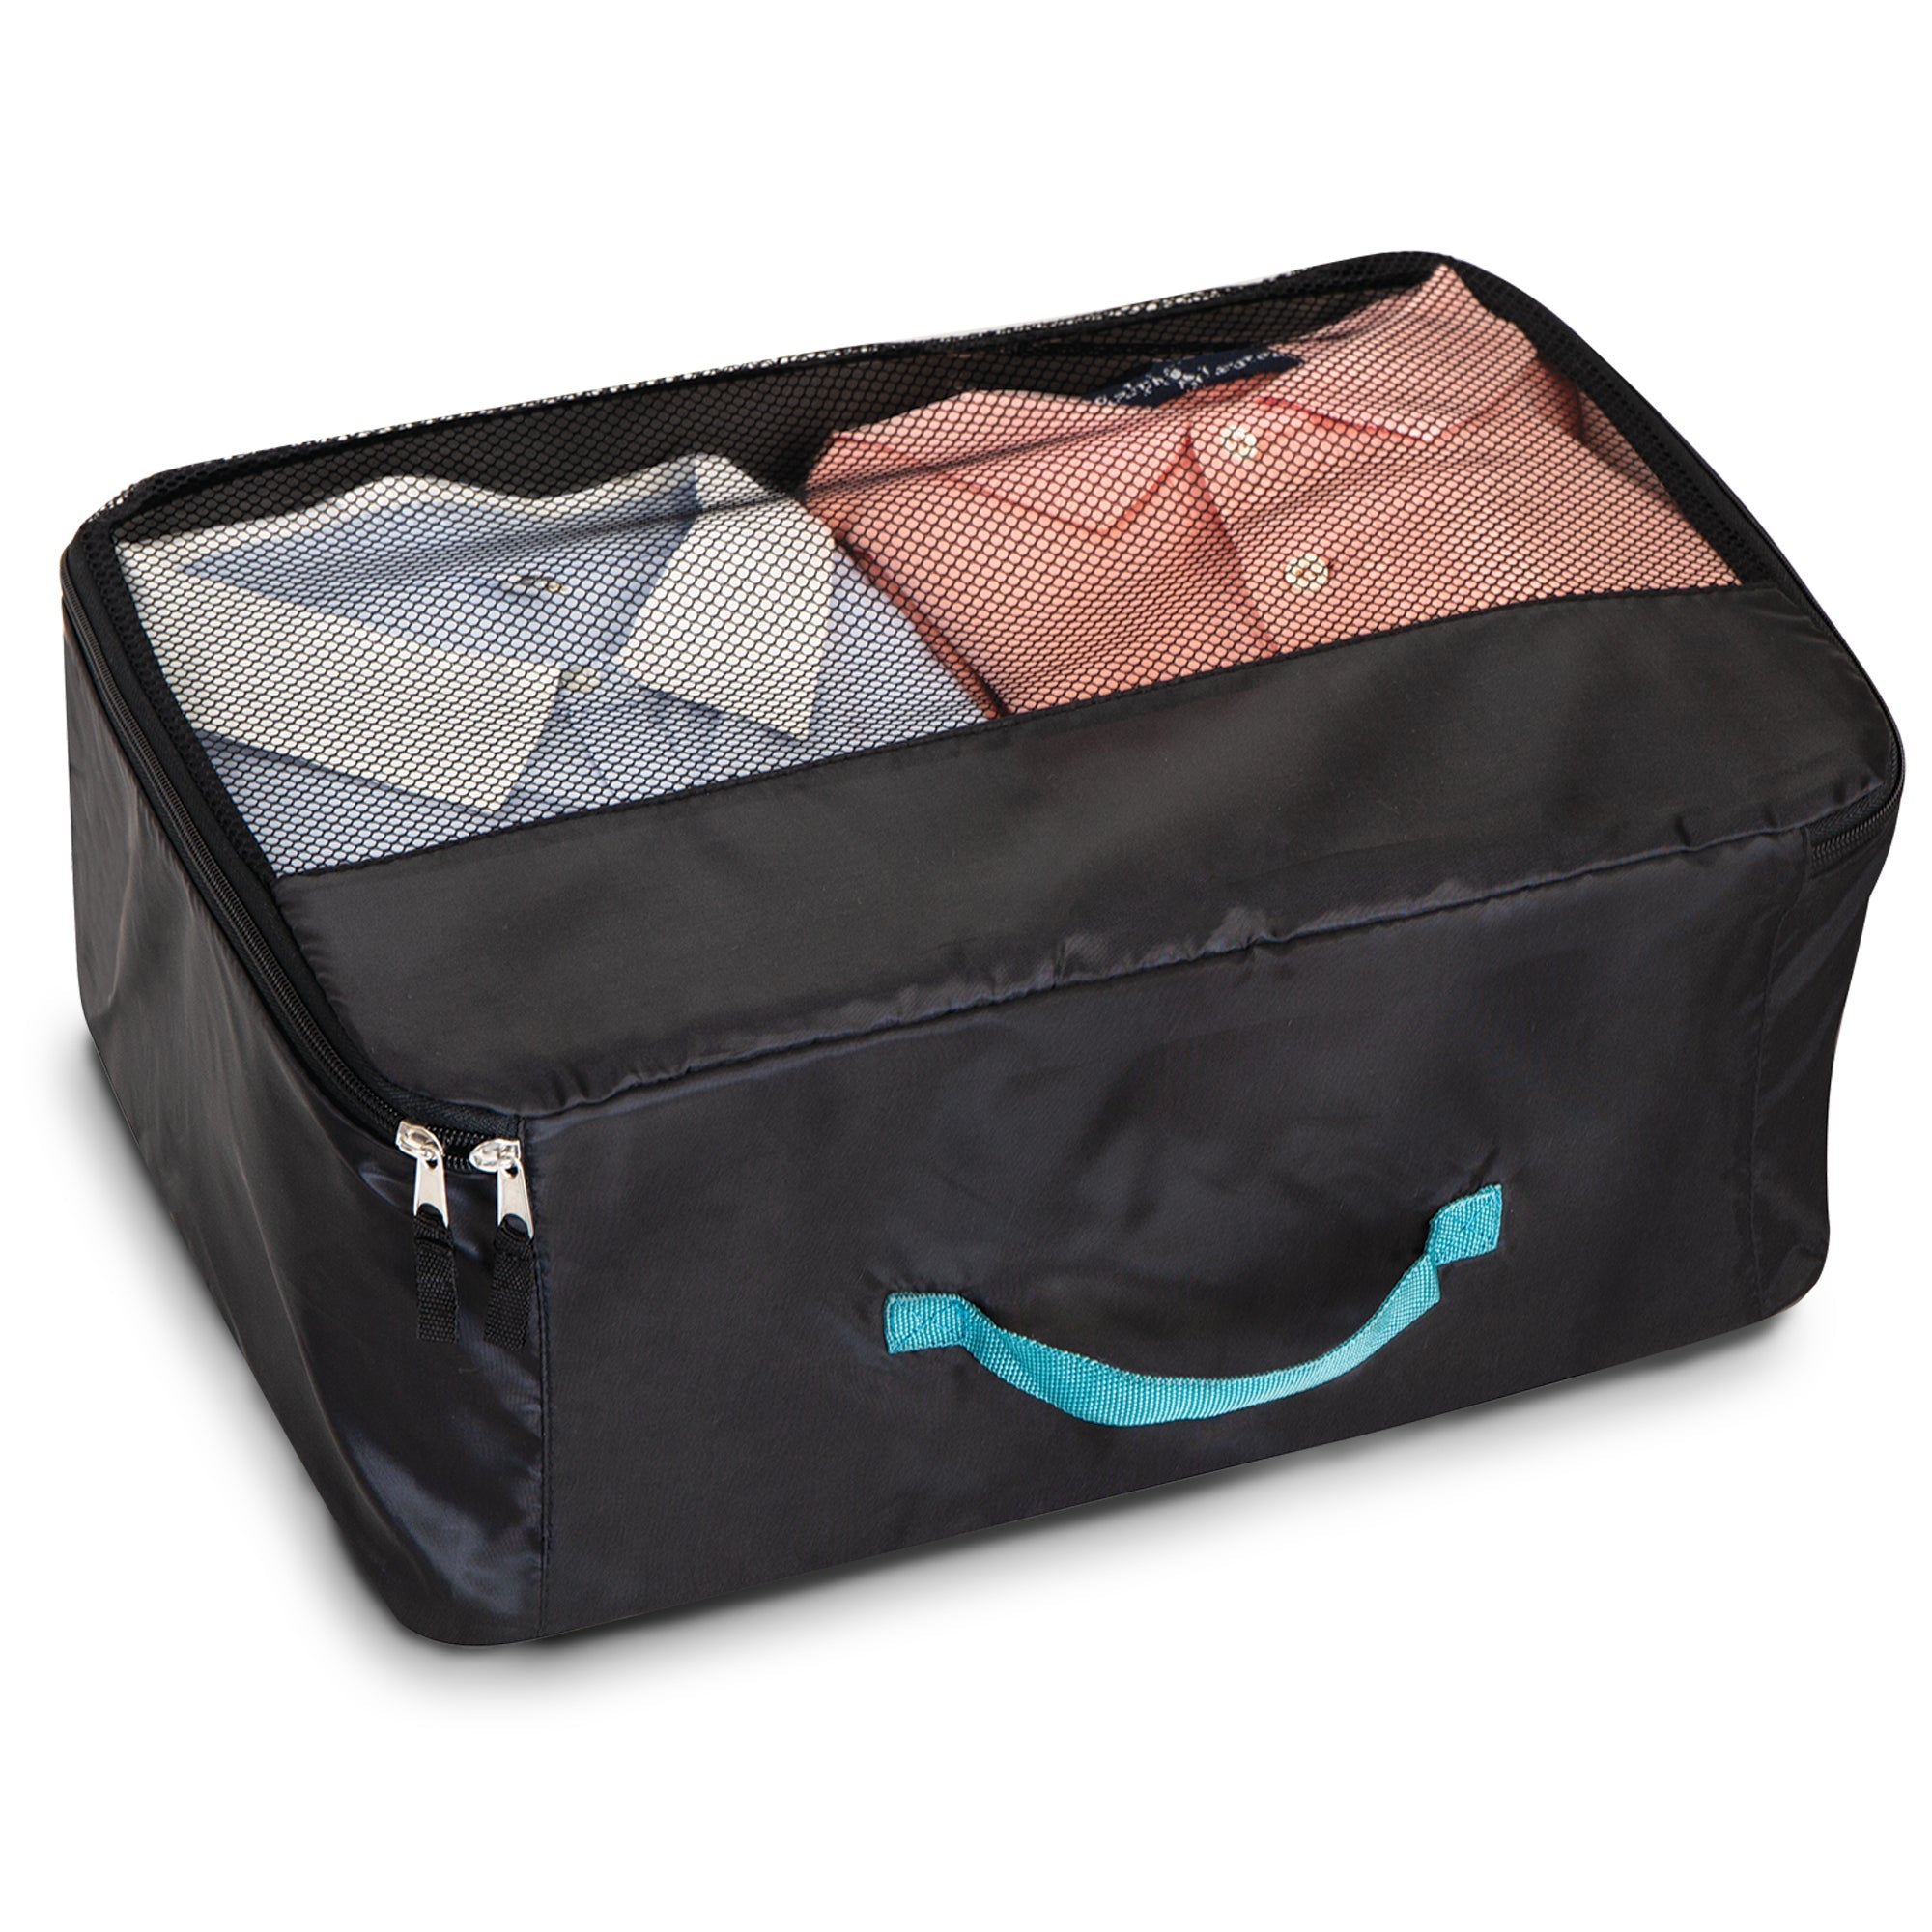 Mesh Travel And Shoe Bag 3 Piece Set - Smart Design® 6